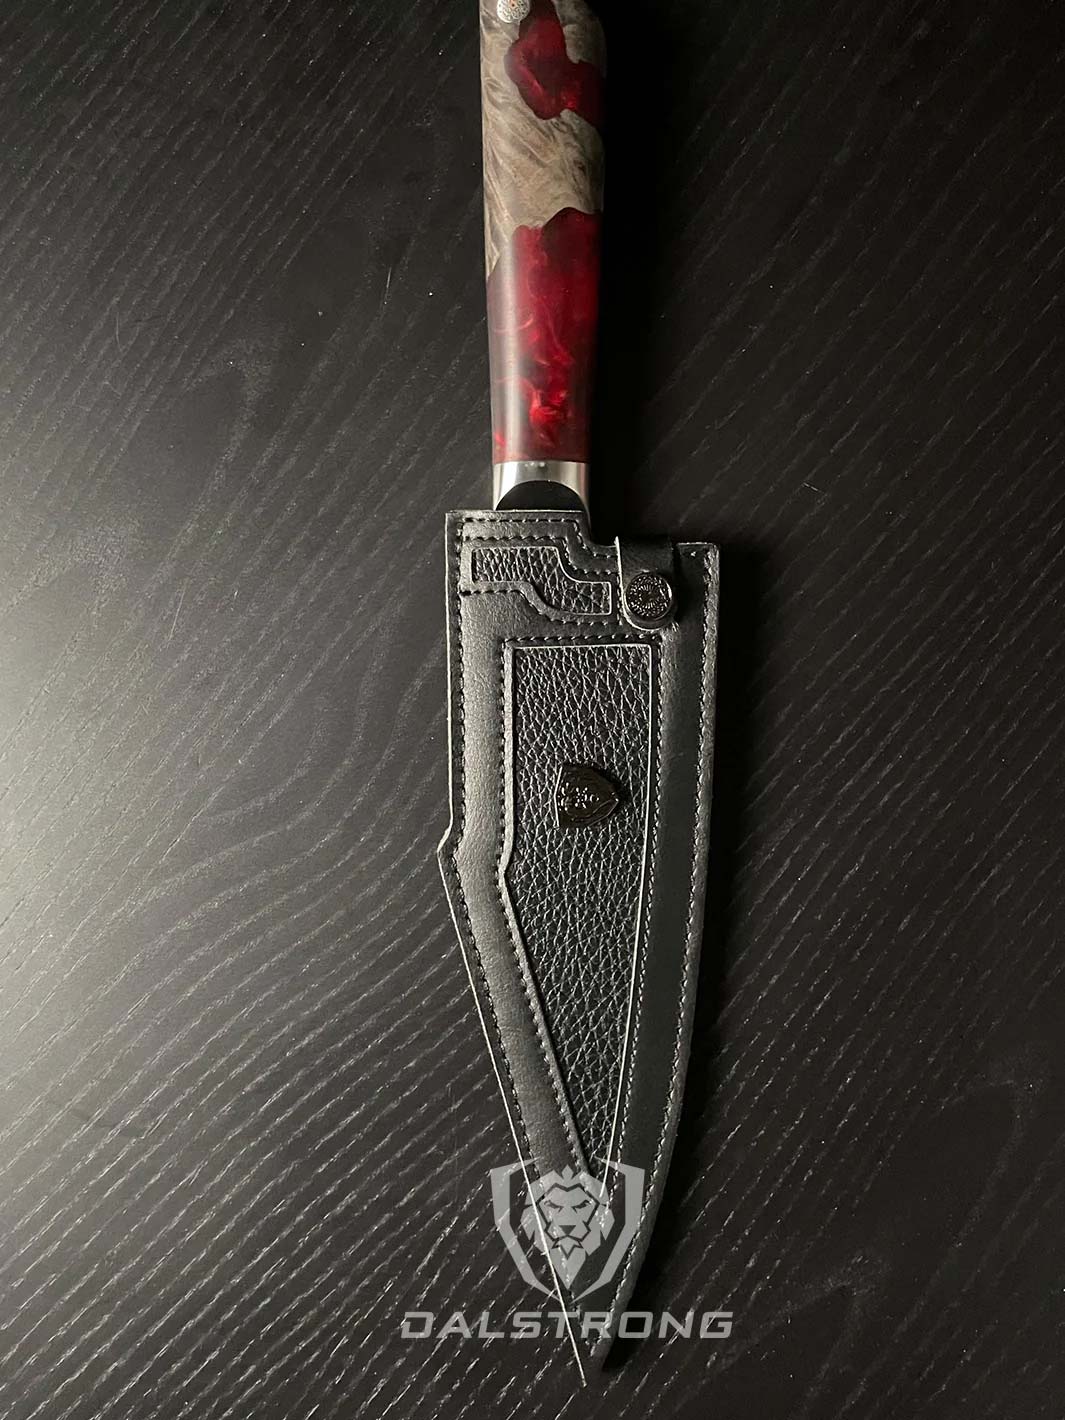 Dalstrong spartan ghost series 7 inch santoku knife inside it's black sheath.